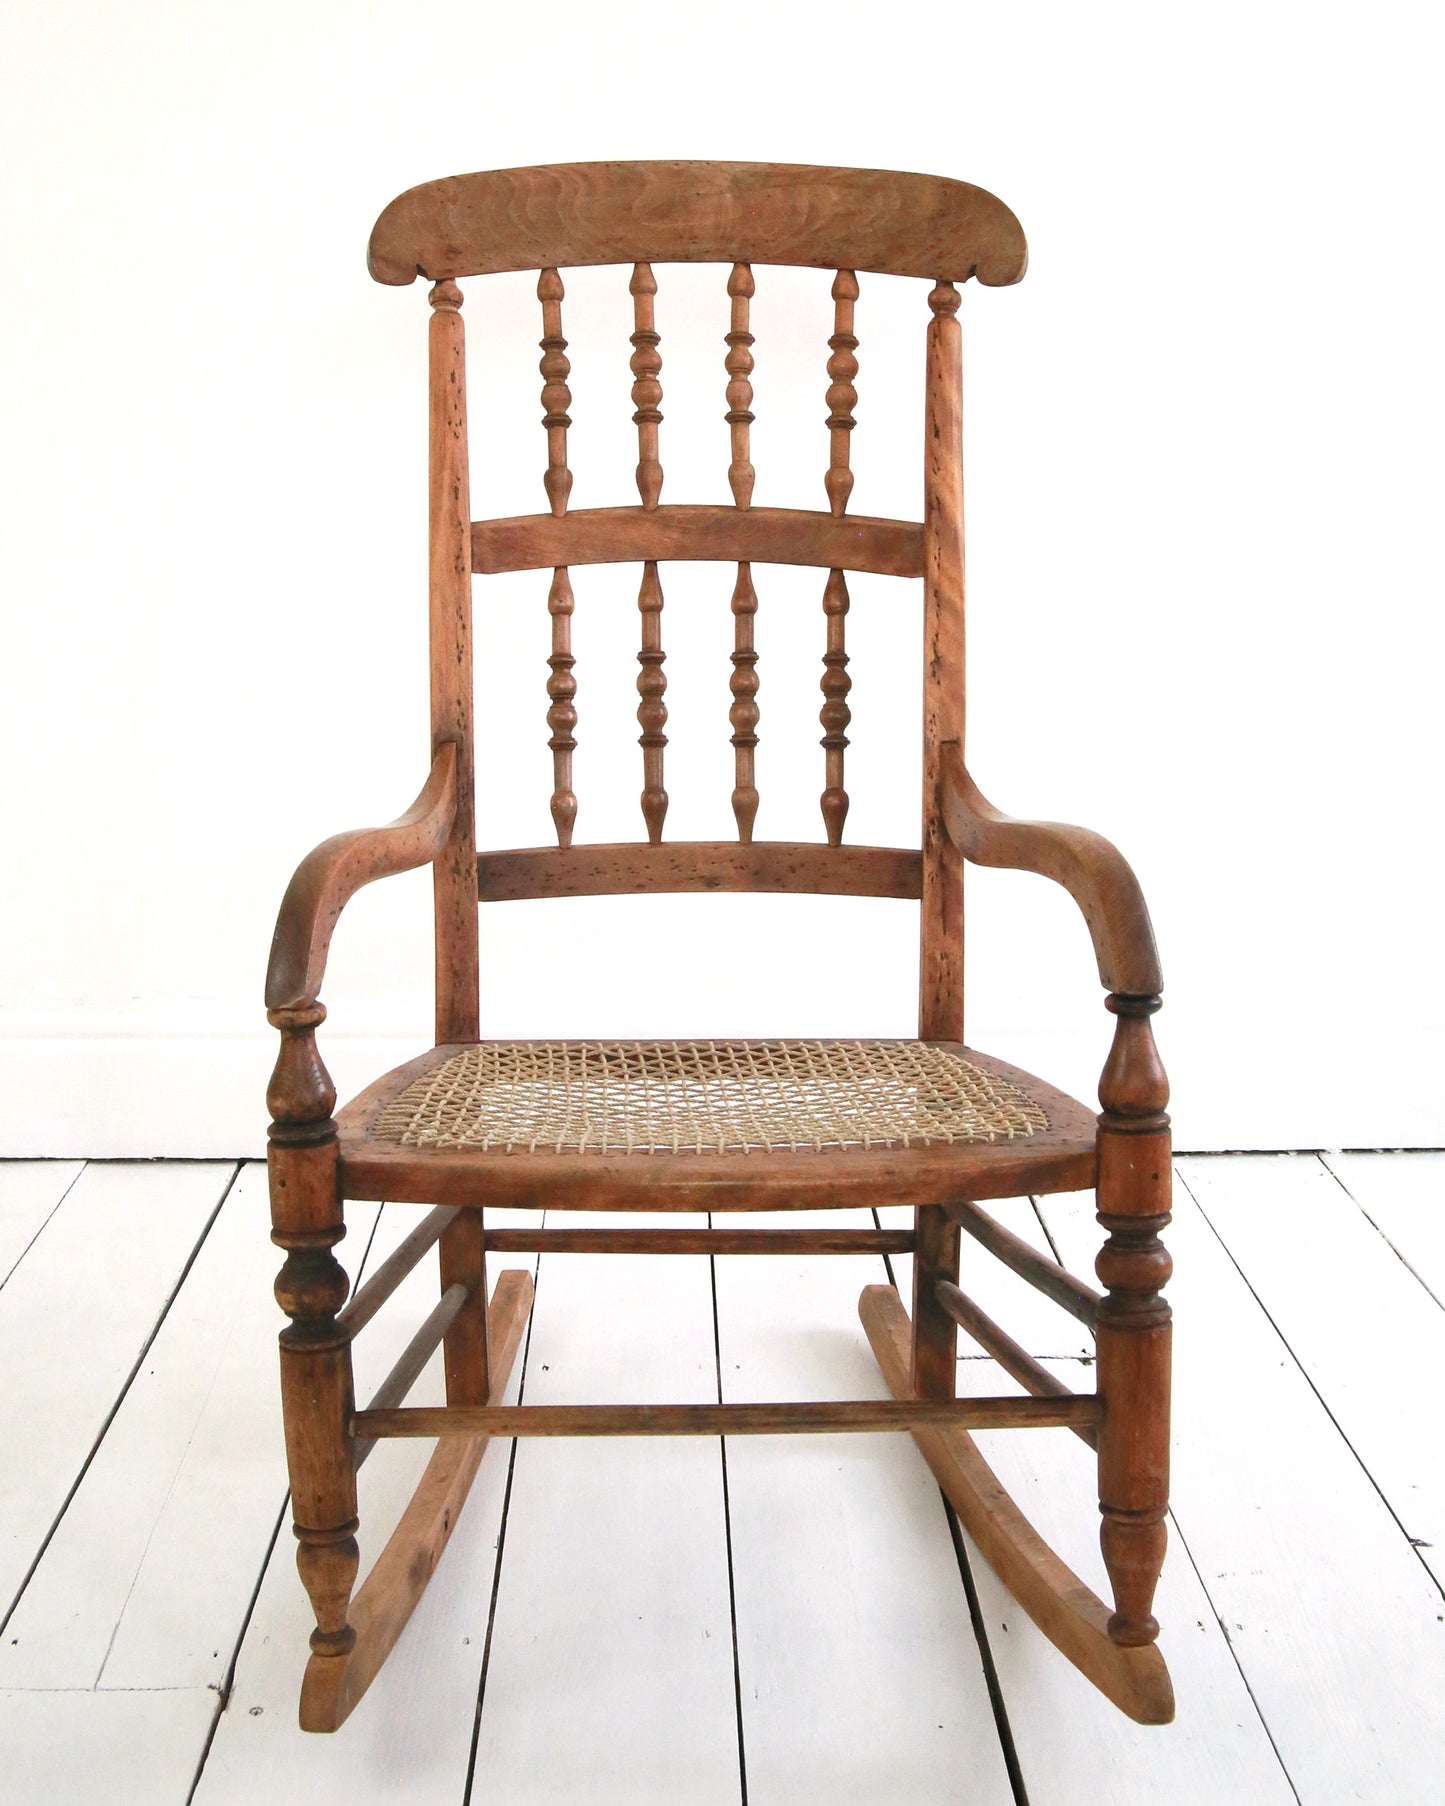 Antique wooden string seat rocking chair